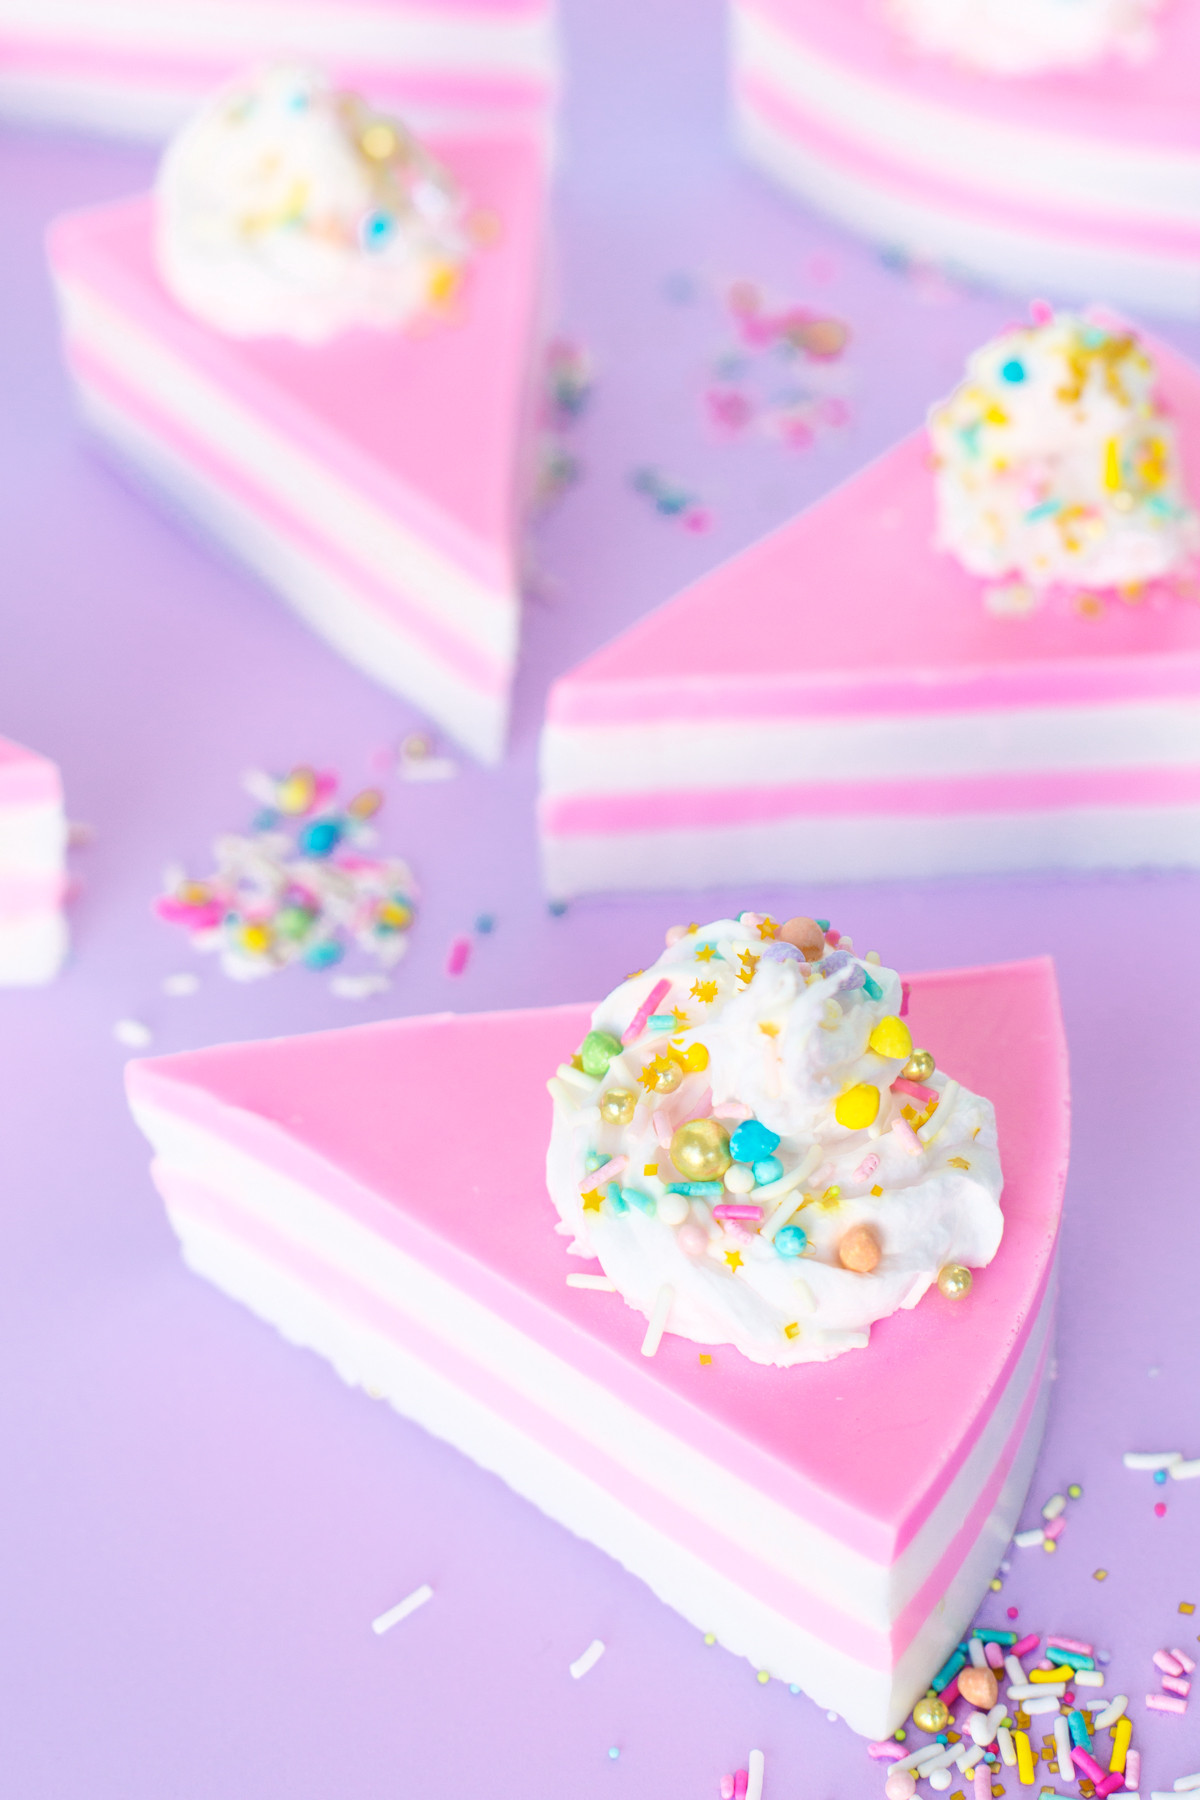 Best ideas about DIY Birthday Cakes
. Save or Pin DIY Birthday Cake Soap Studio DIY Now.